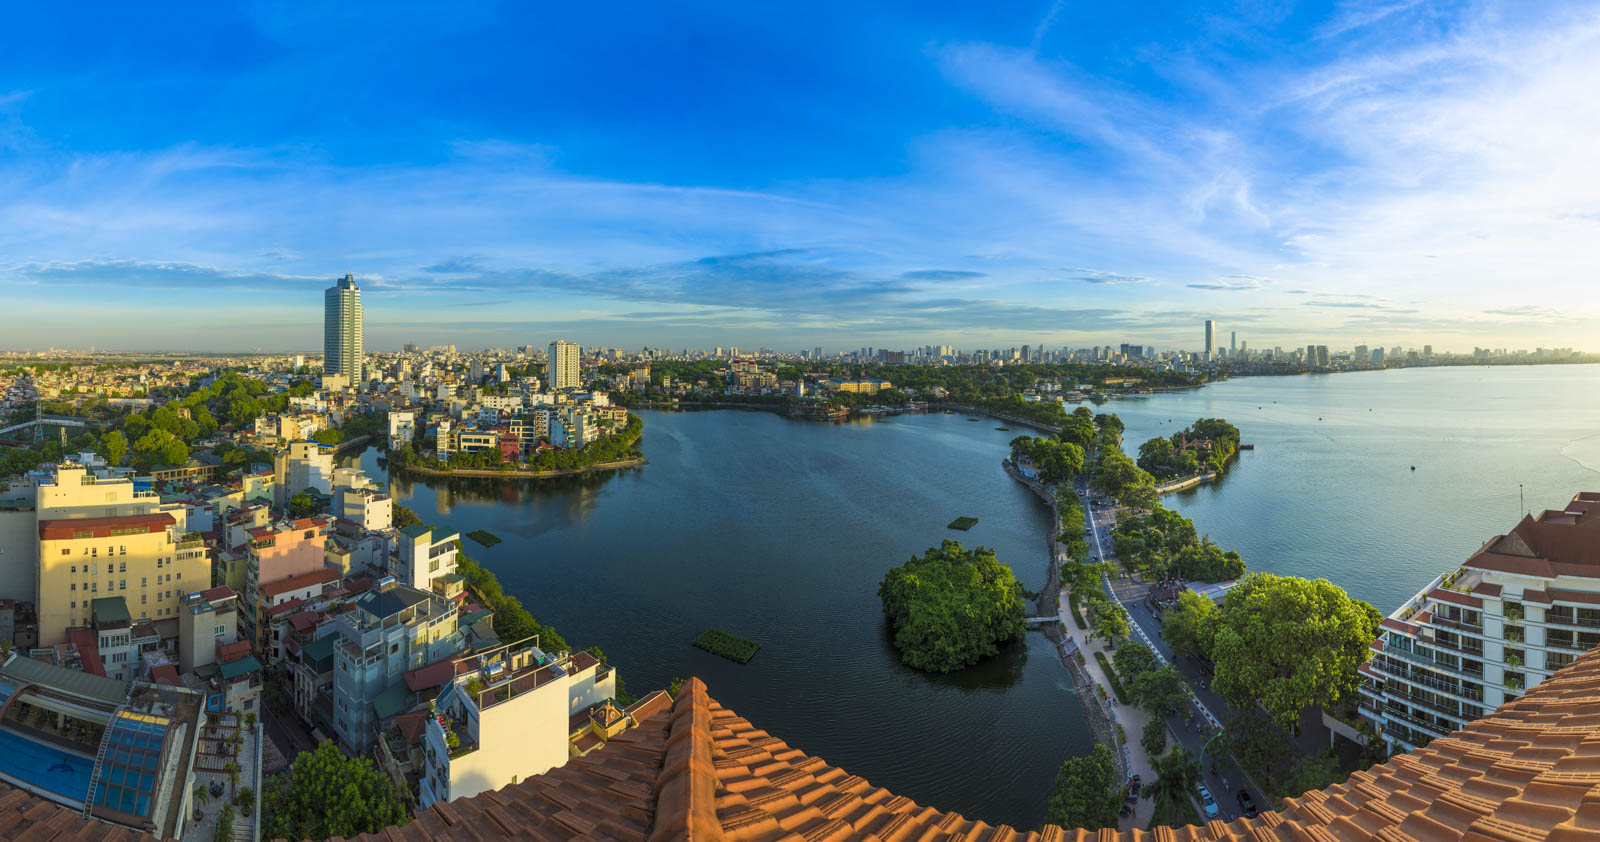 Landscape view of Hanoi